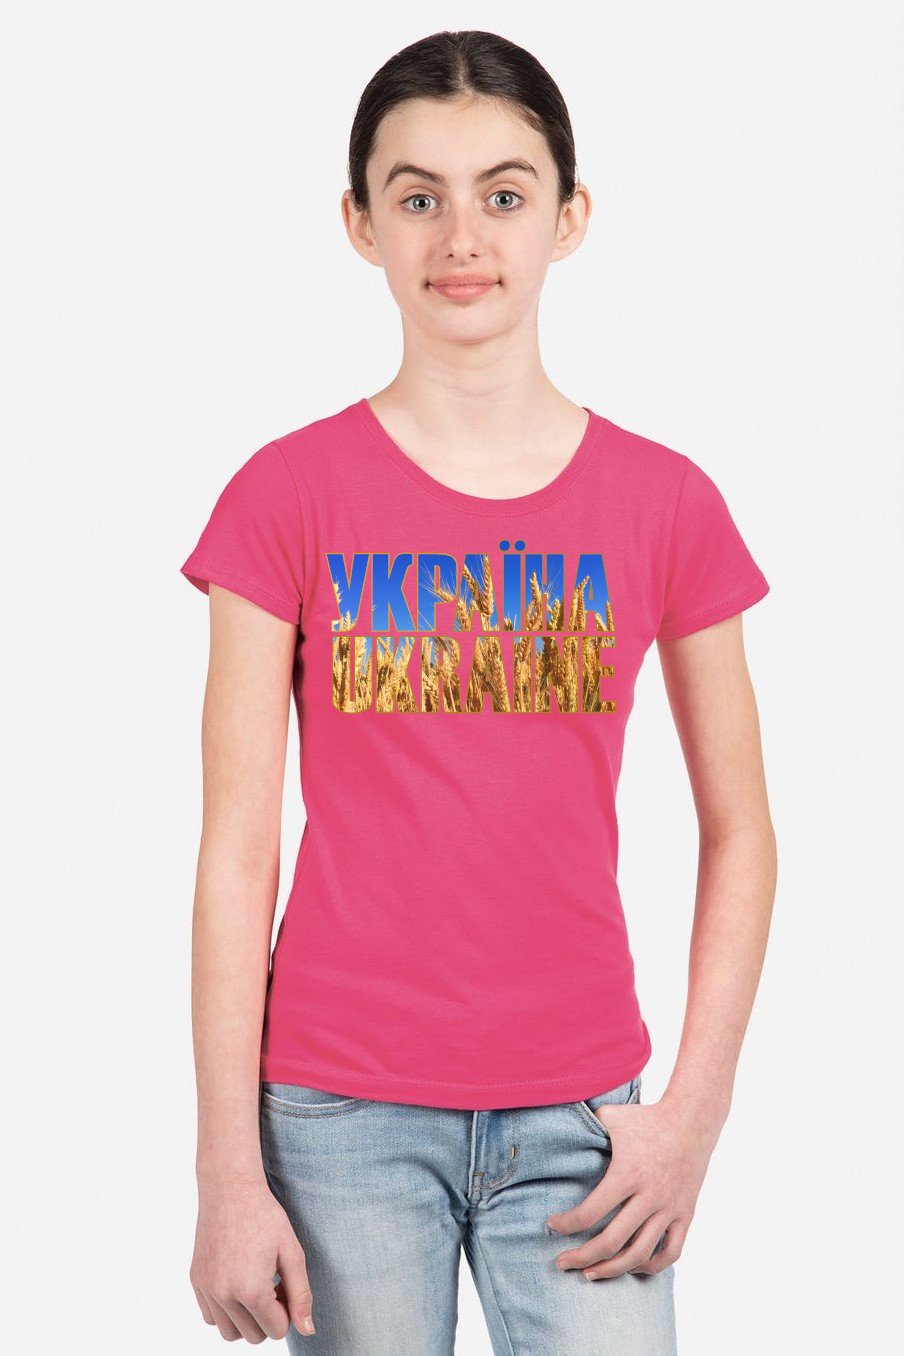 Girl's t-shirt "Україна Ukraine"